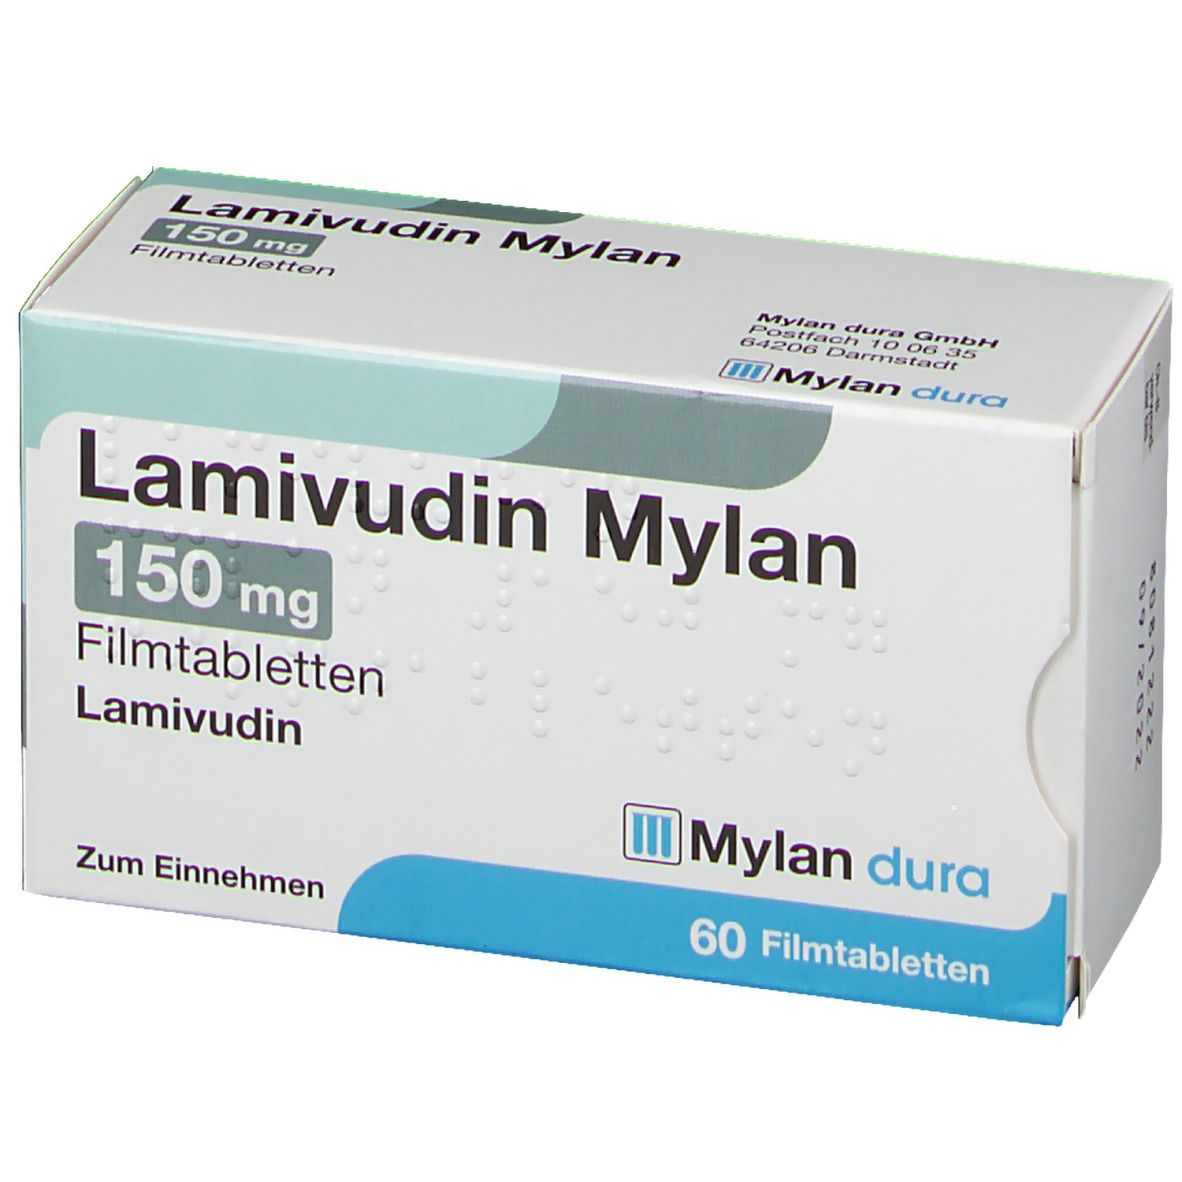 Lamivudin Mylan 150 mg